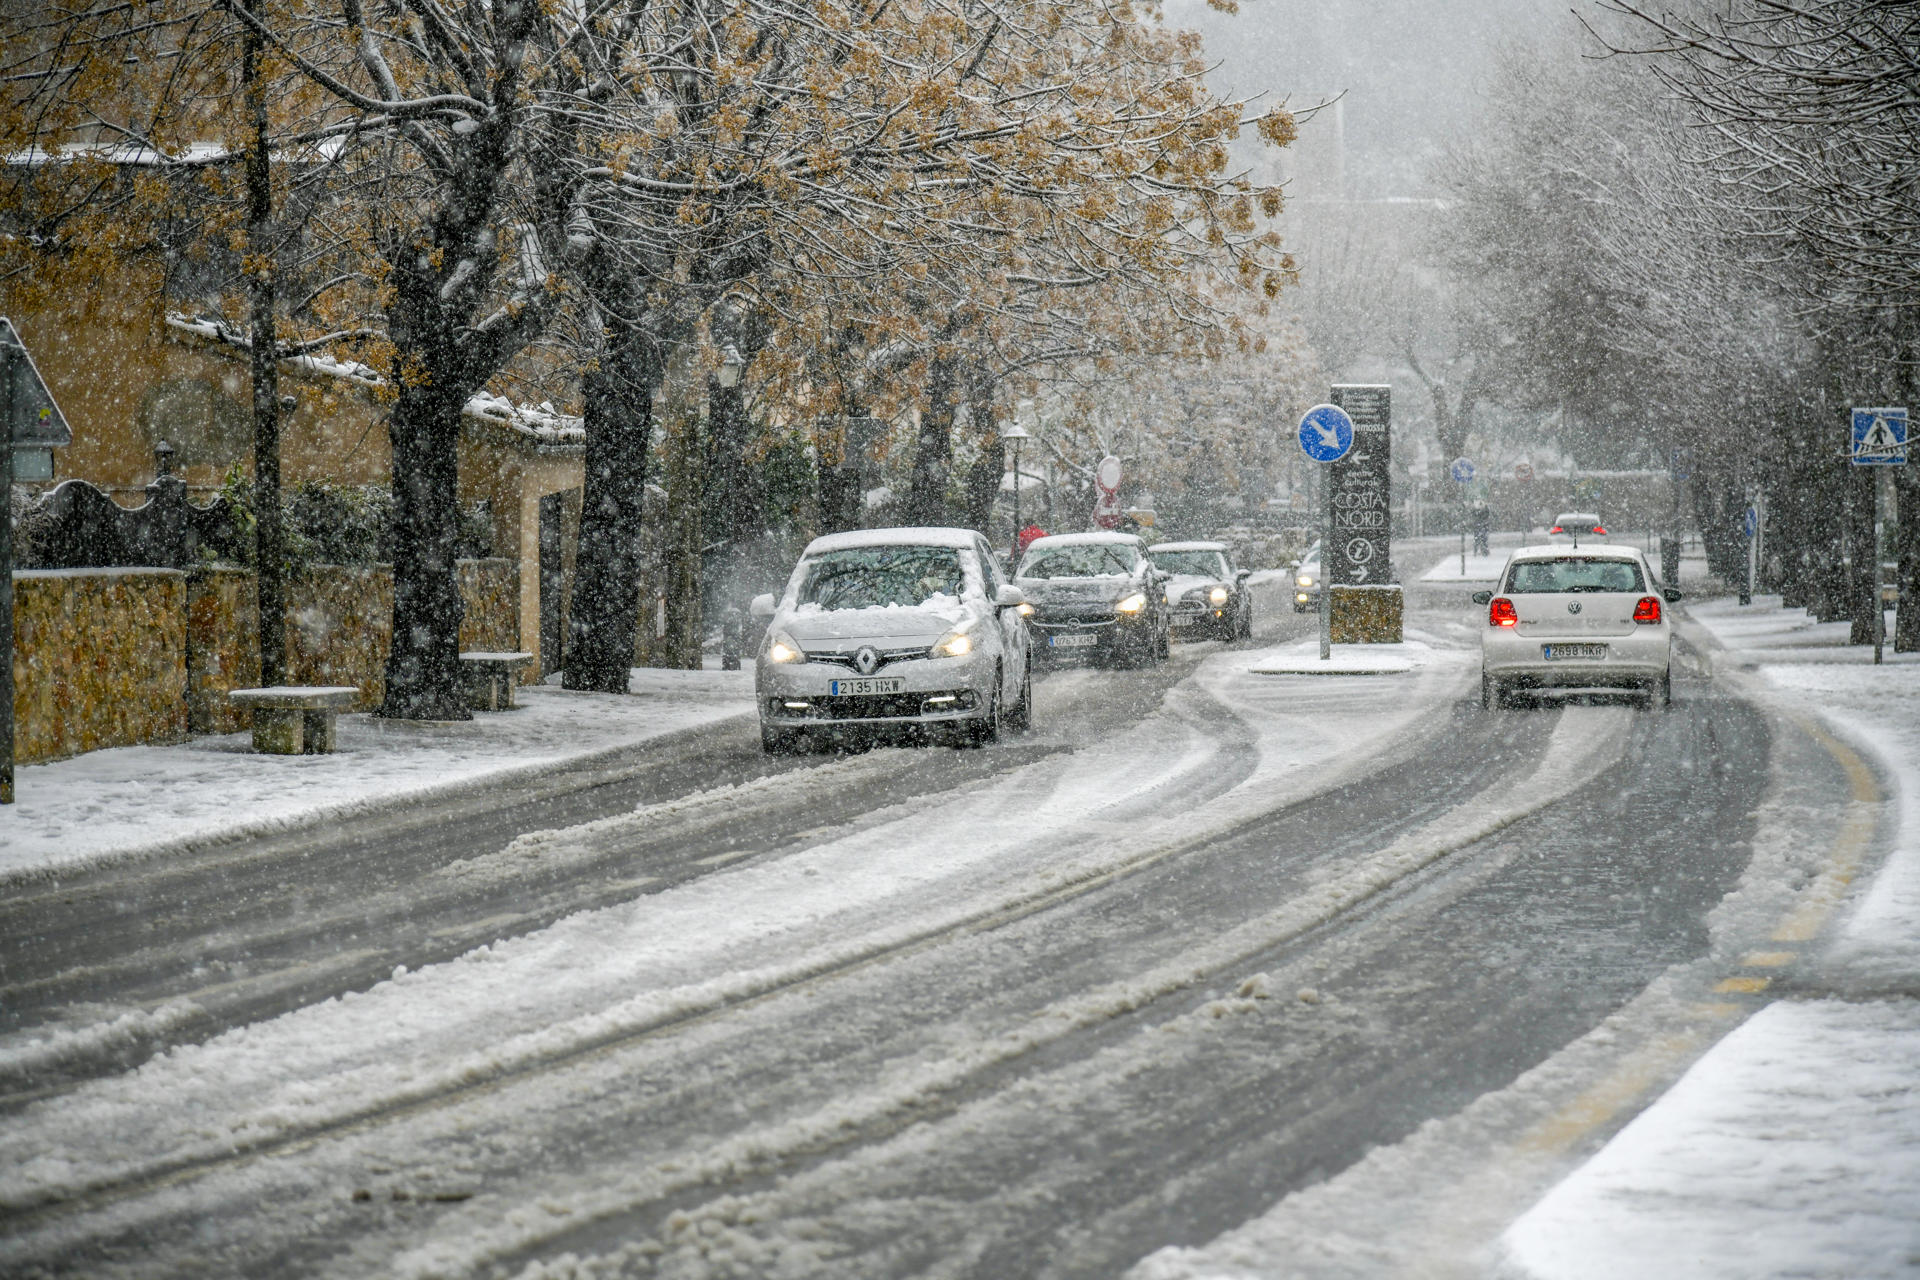 Varios coches circulando esta semana por las calles nevadas de la región mallorquina de Valldemossa. EFE/CATI CLADERA